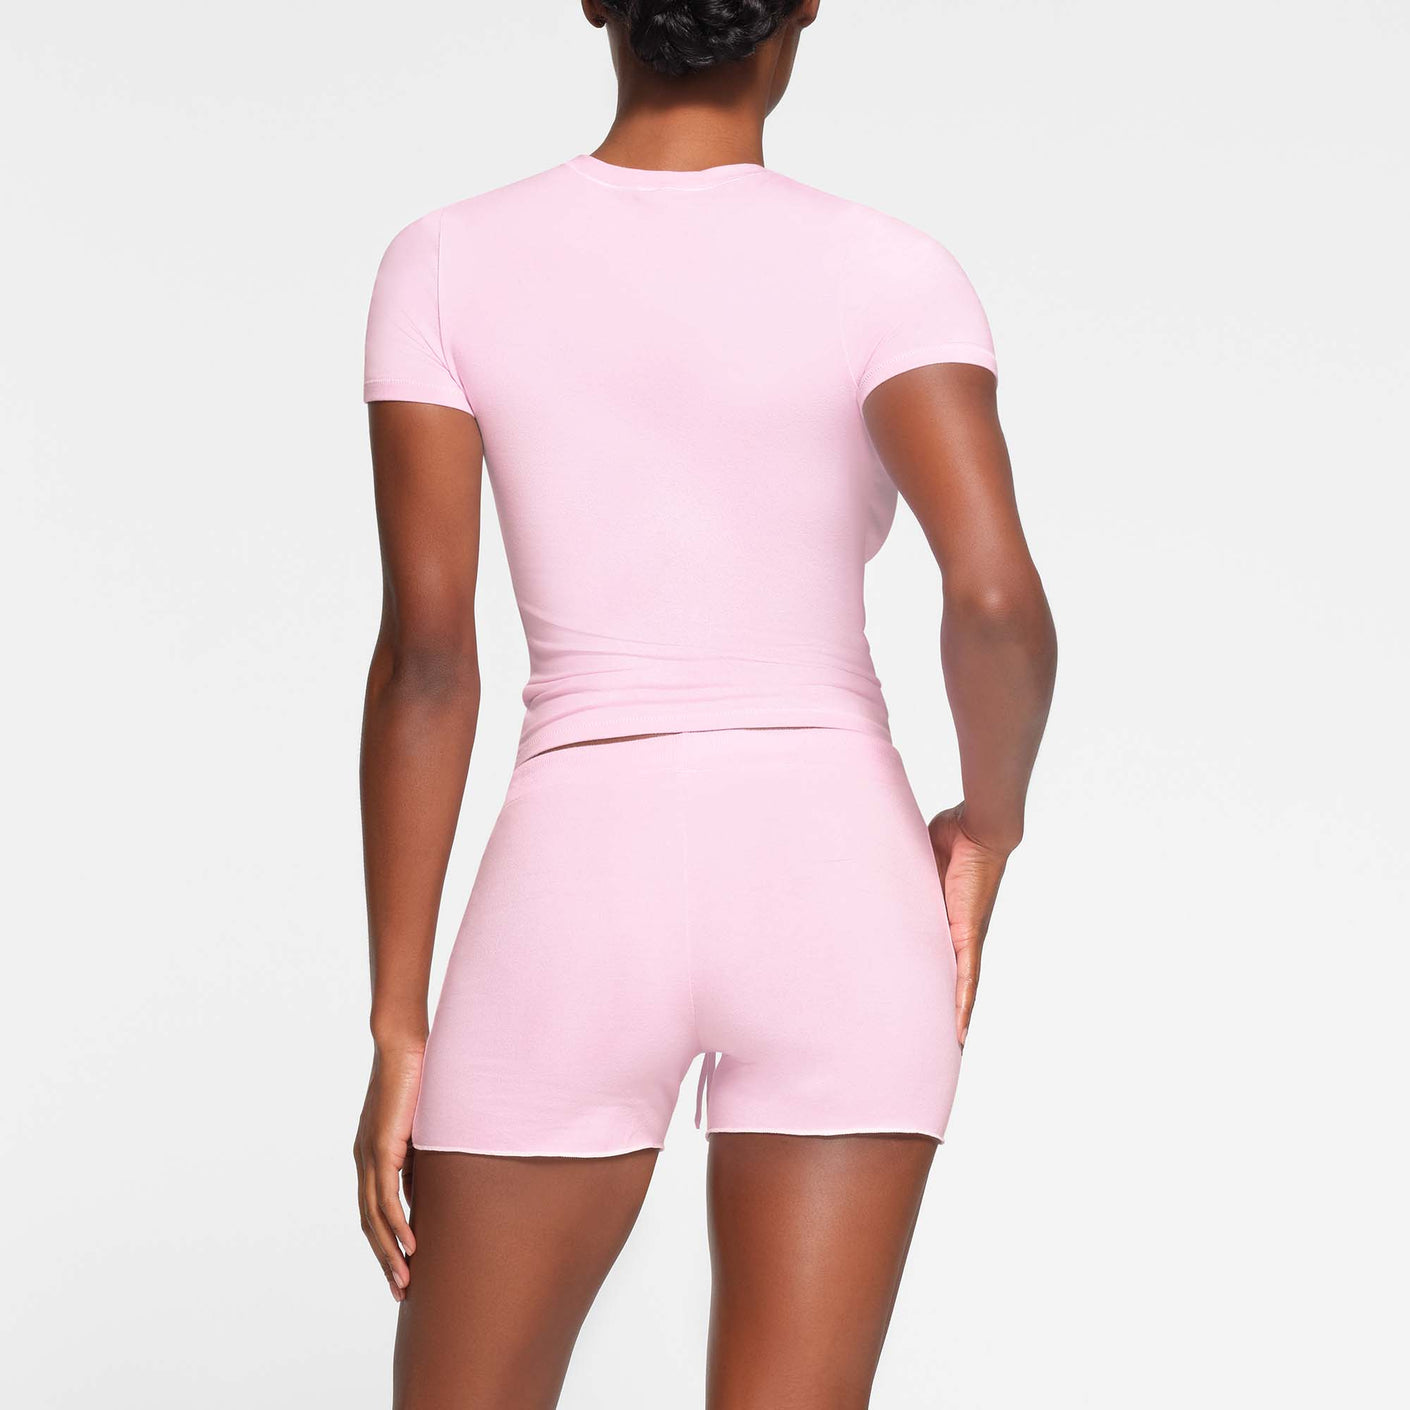 Skims Light Pink Cozy Shorts and Tank Set Women's 2XL/3XL